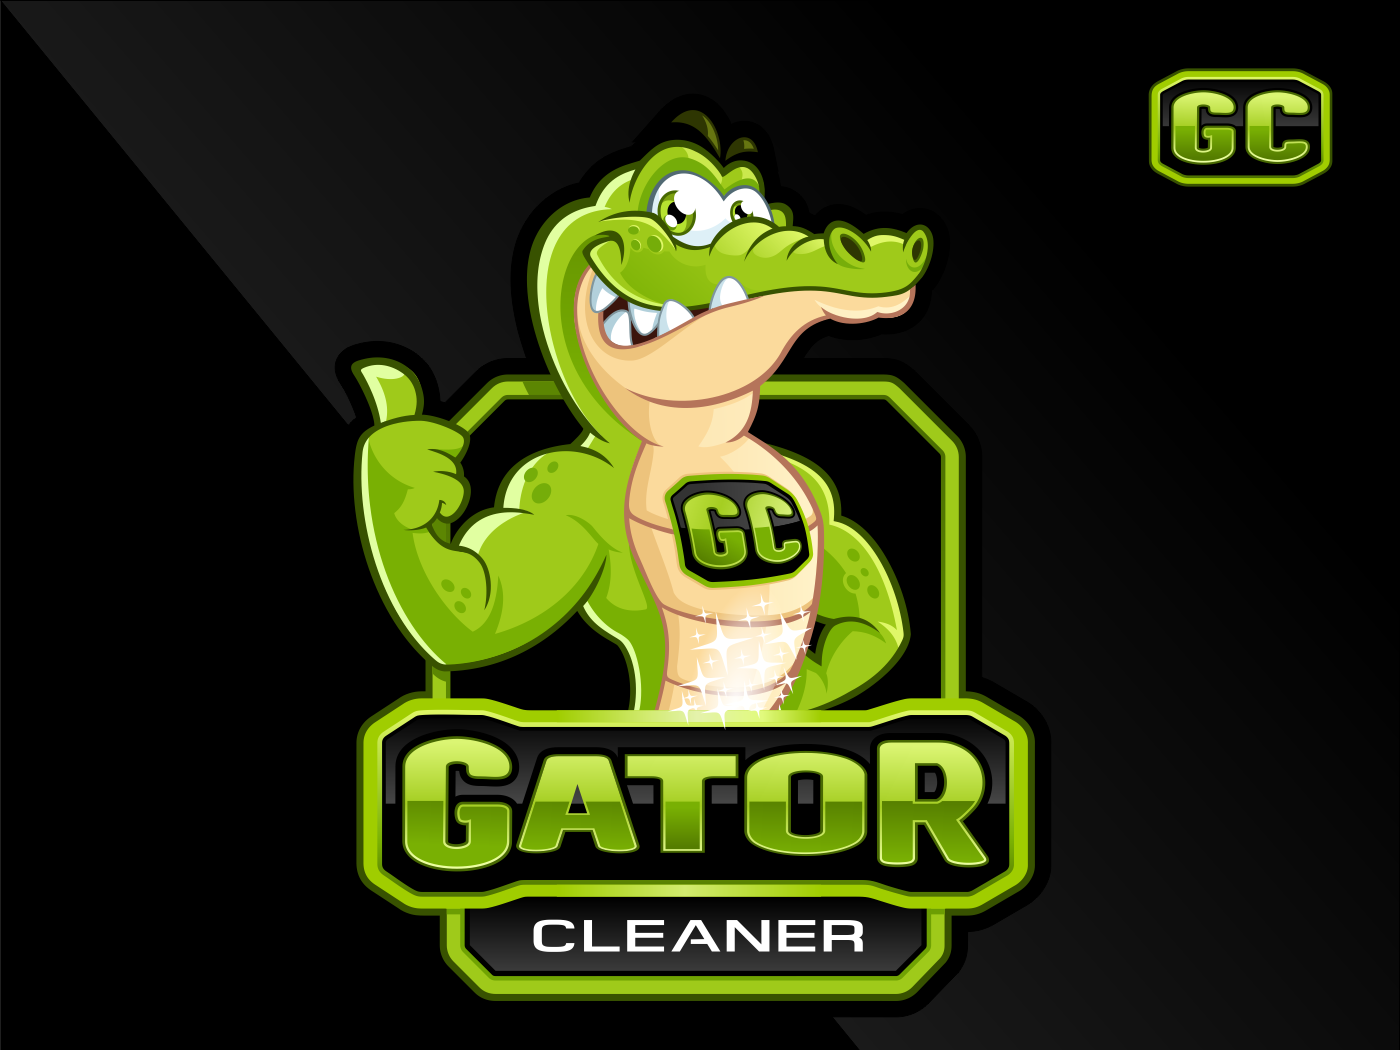 Gator Logo by Marko Bodrozic on Dribbble